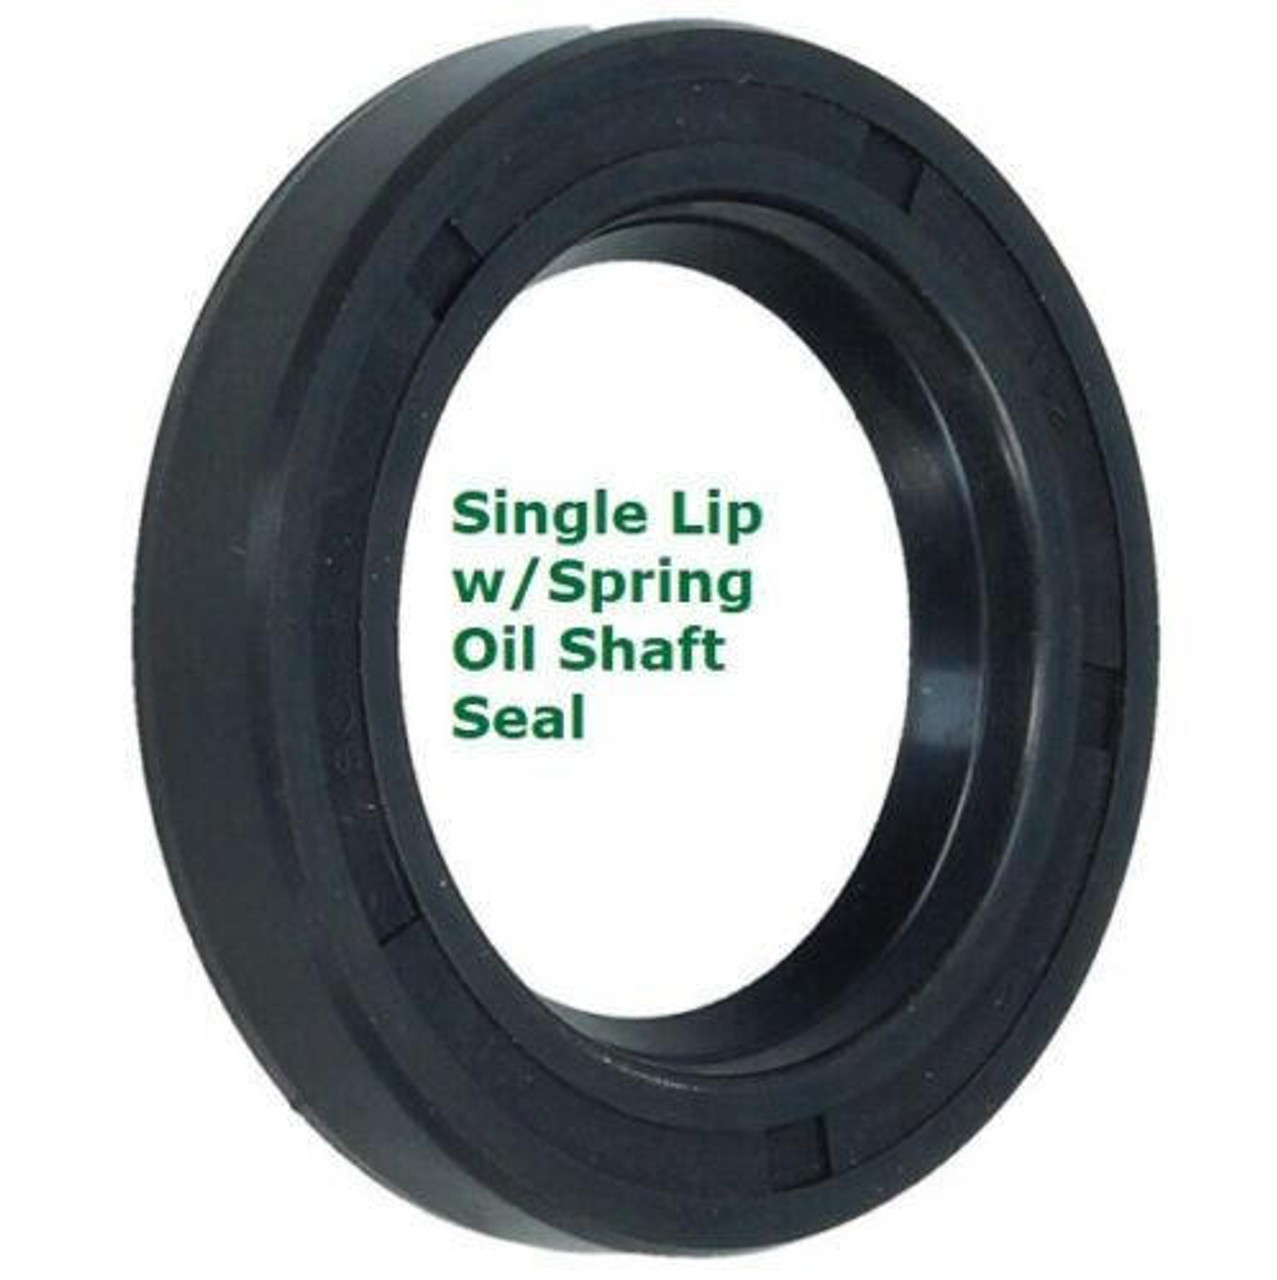 Metric Oil Shaft Seal 450 x 490 x 20mm   Single Lip   Price for 1 pc